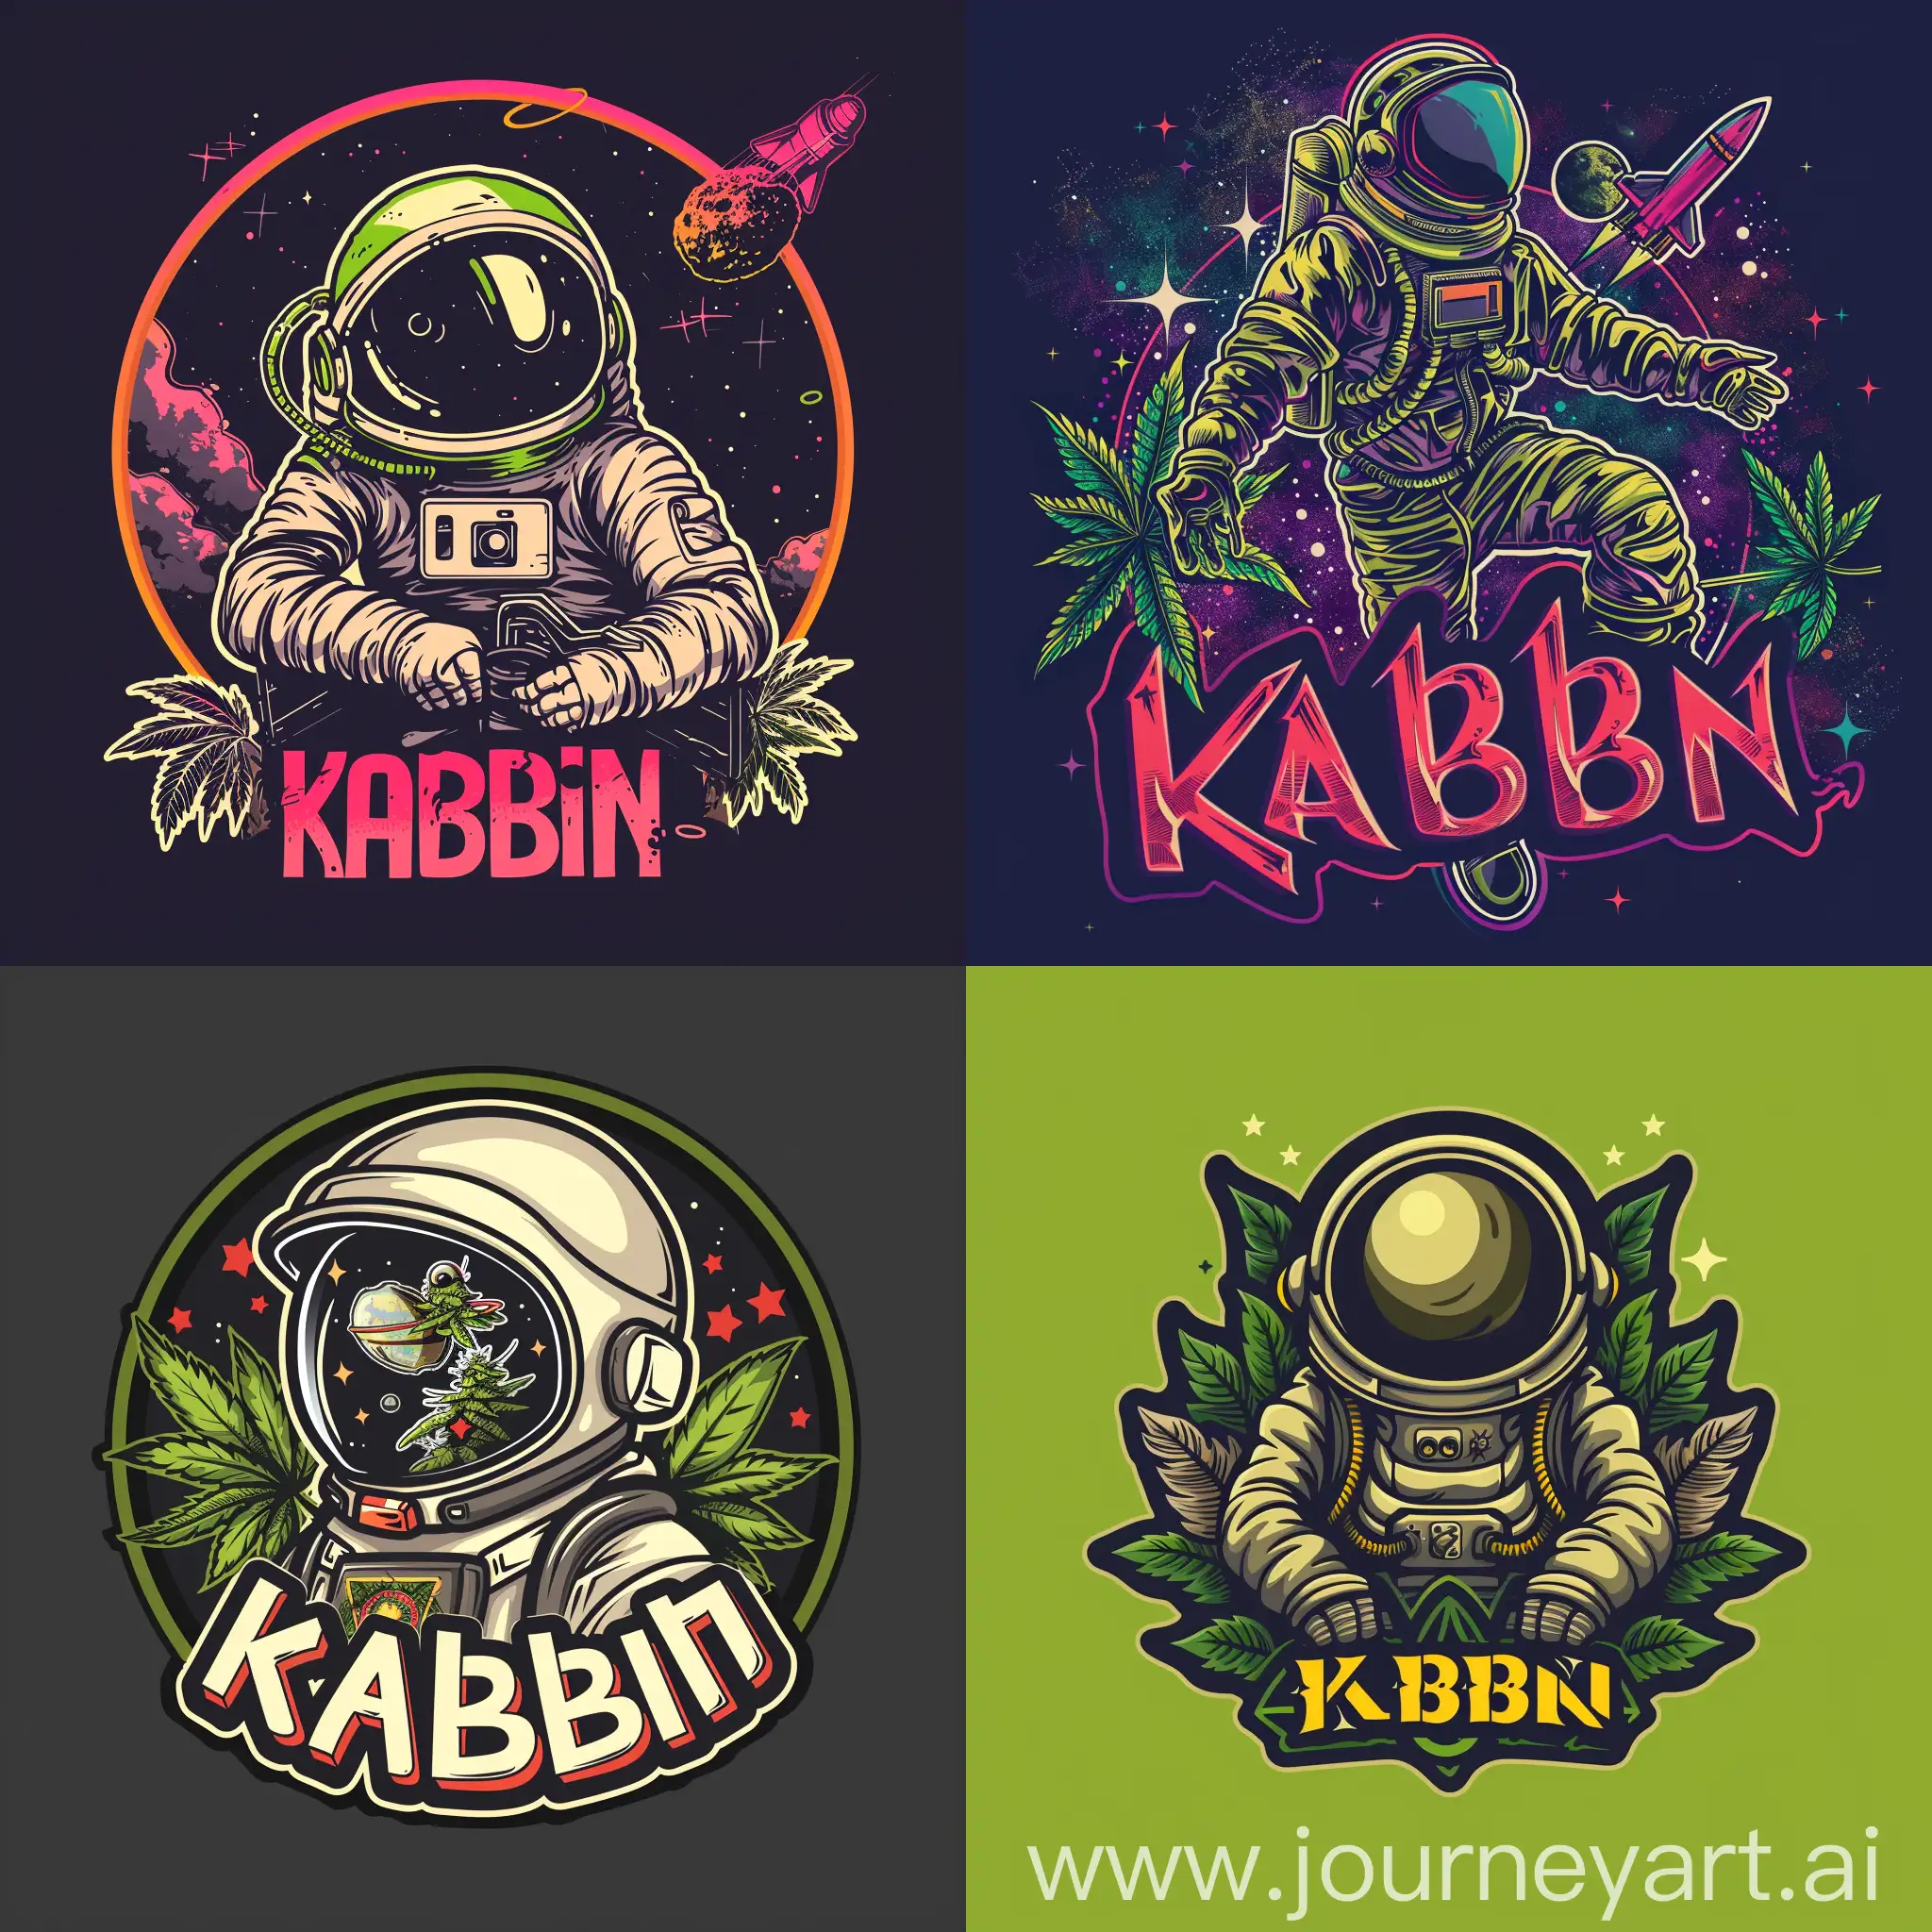 stoner space man theme logo for coffeeshop called "Kabin"